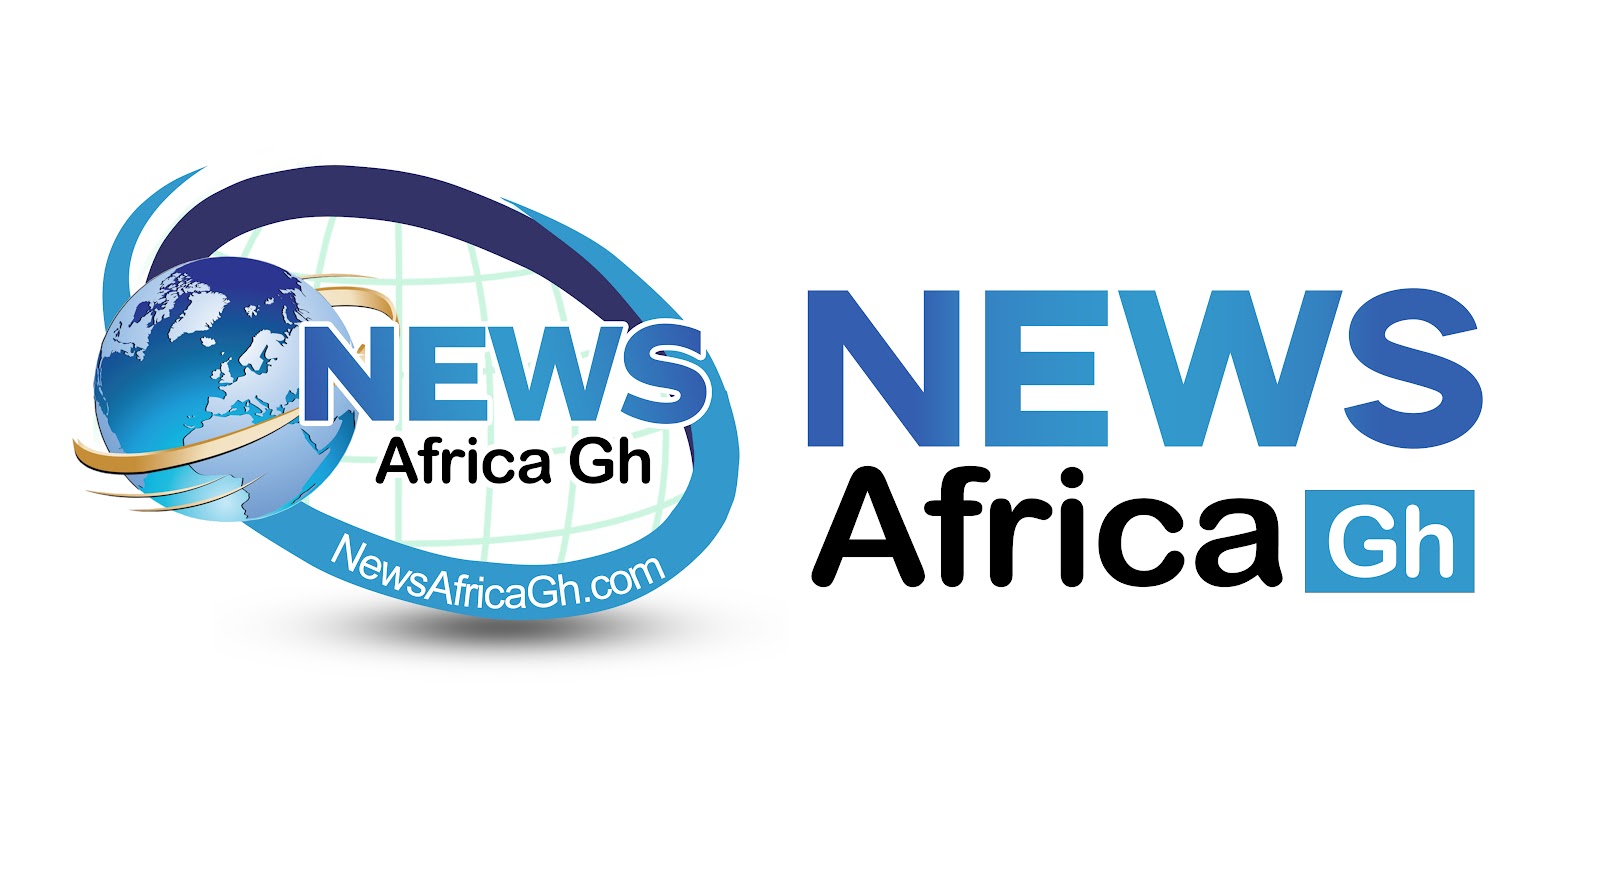 News Africa Gh